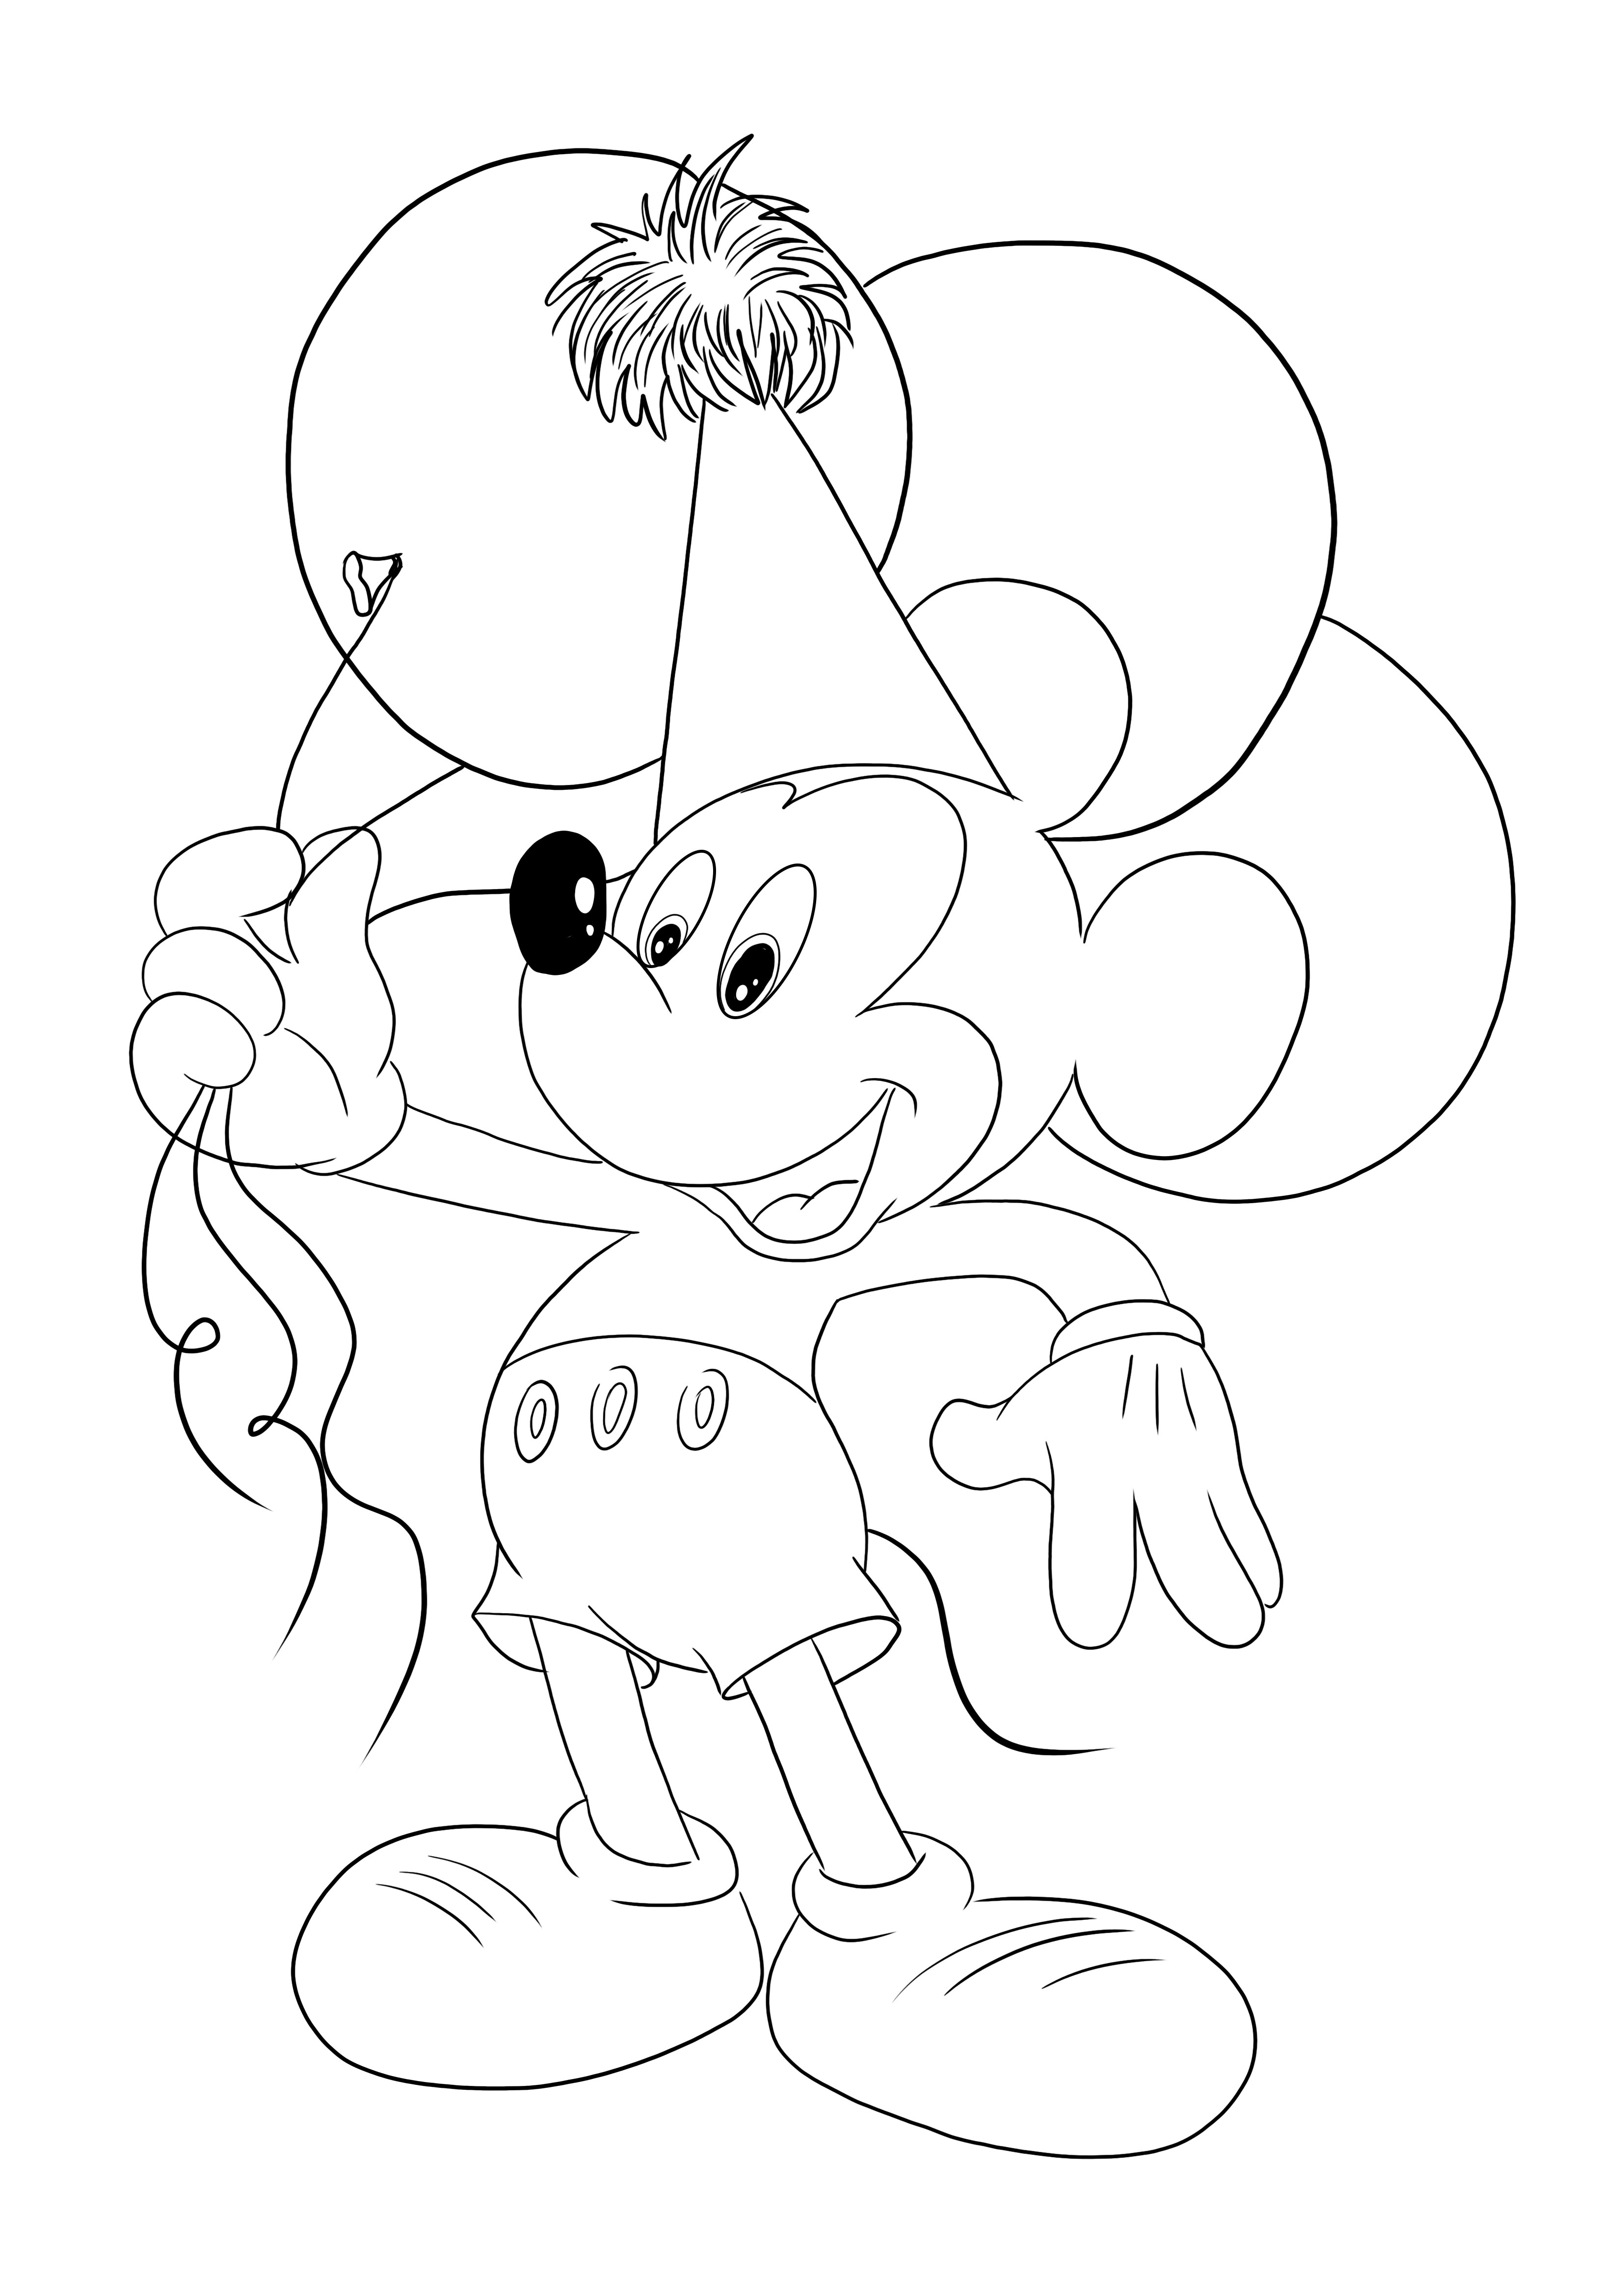 Mickey Mouse dengan Balon dicetak bebas untuk diwarnai dengan mudah oleh anak-anak